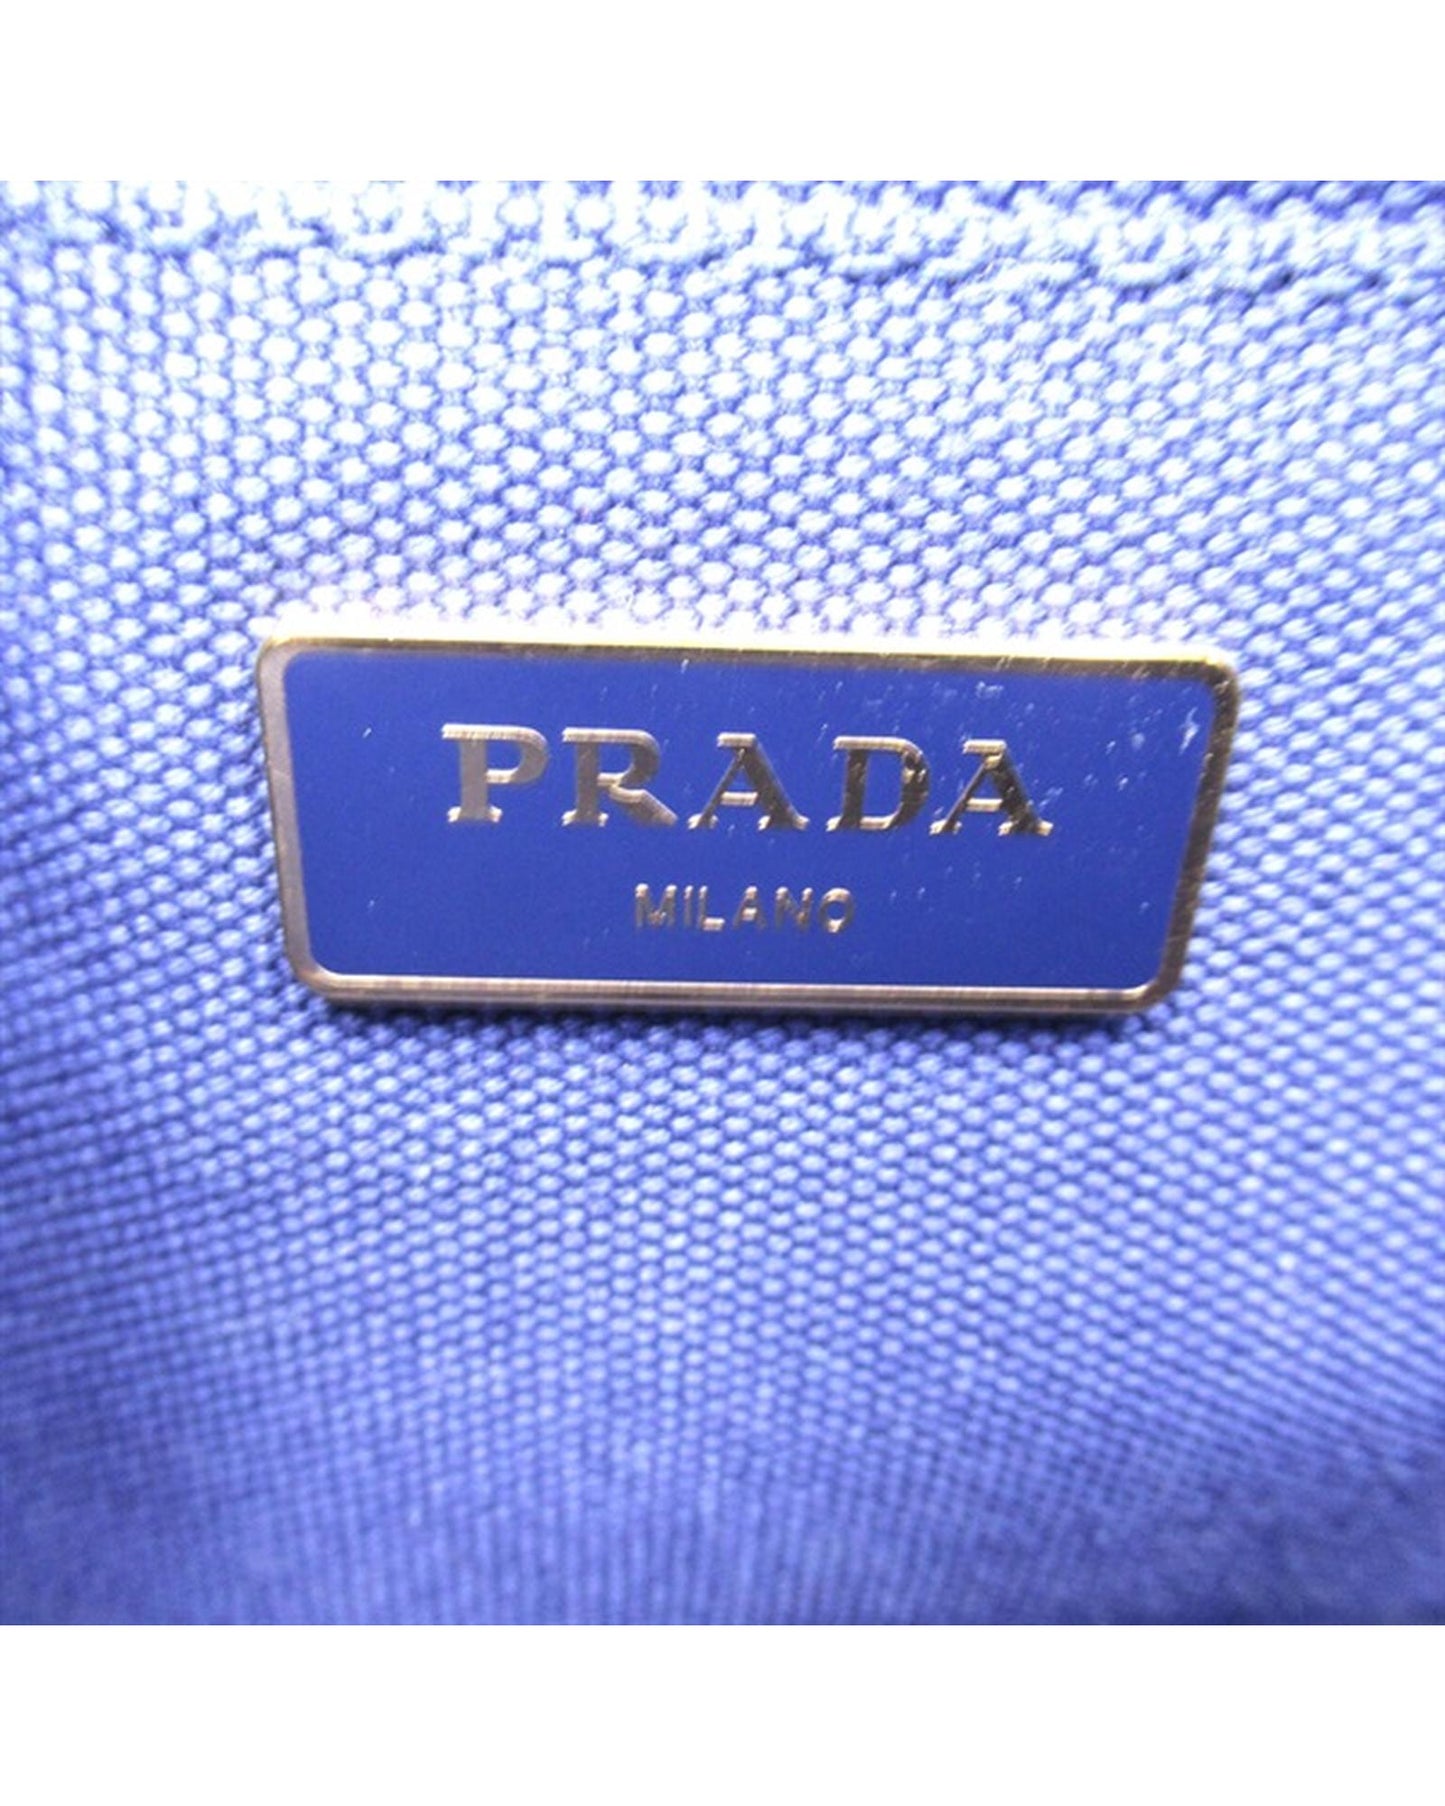 Prada Women's Blue Canvas Logo Tote Bag in Blue